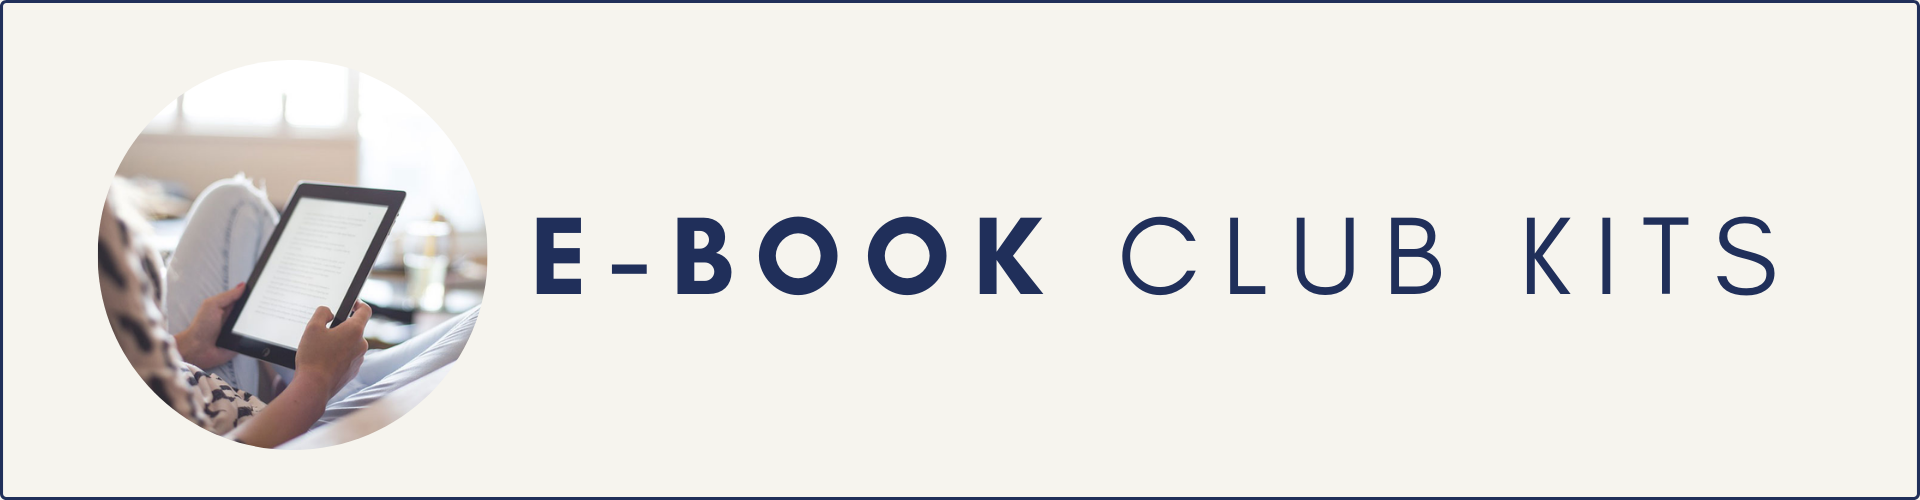 e-book club kit logo